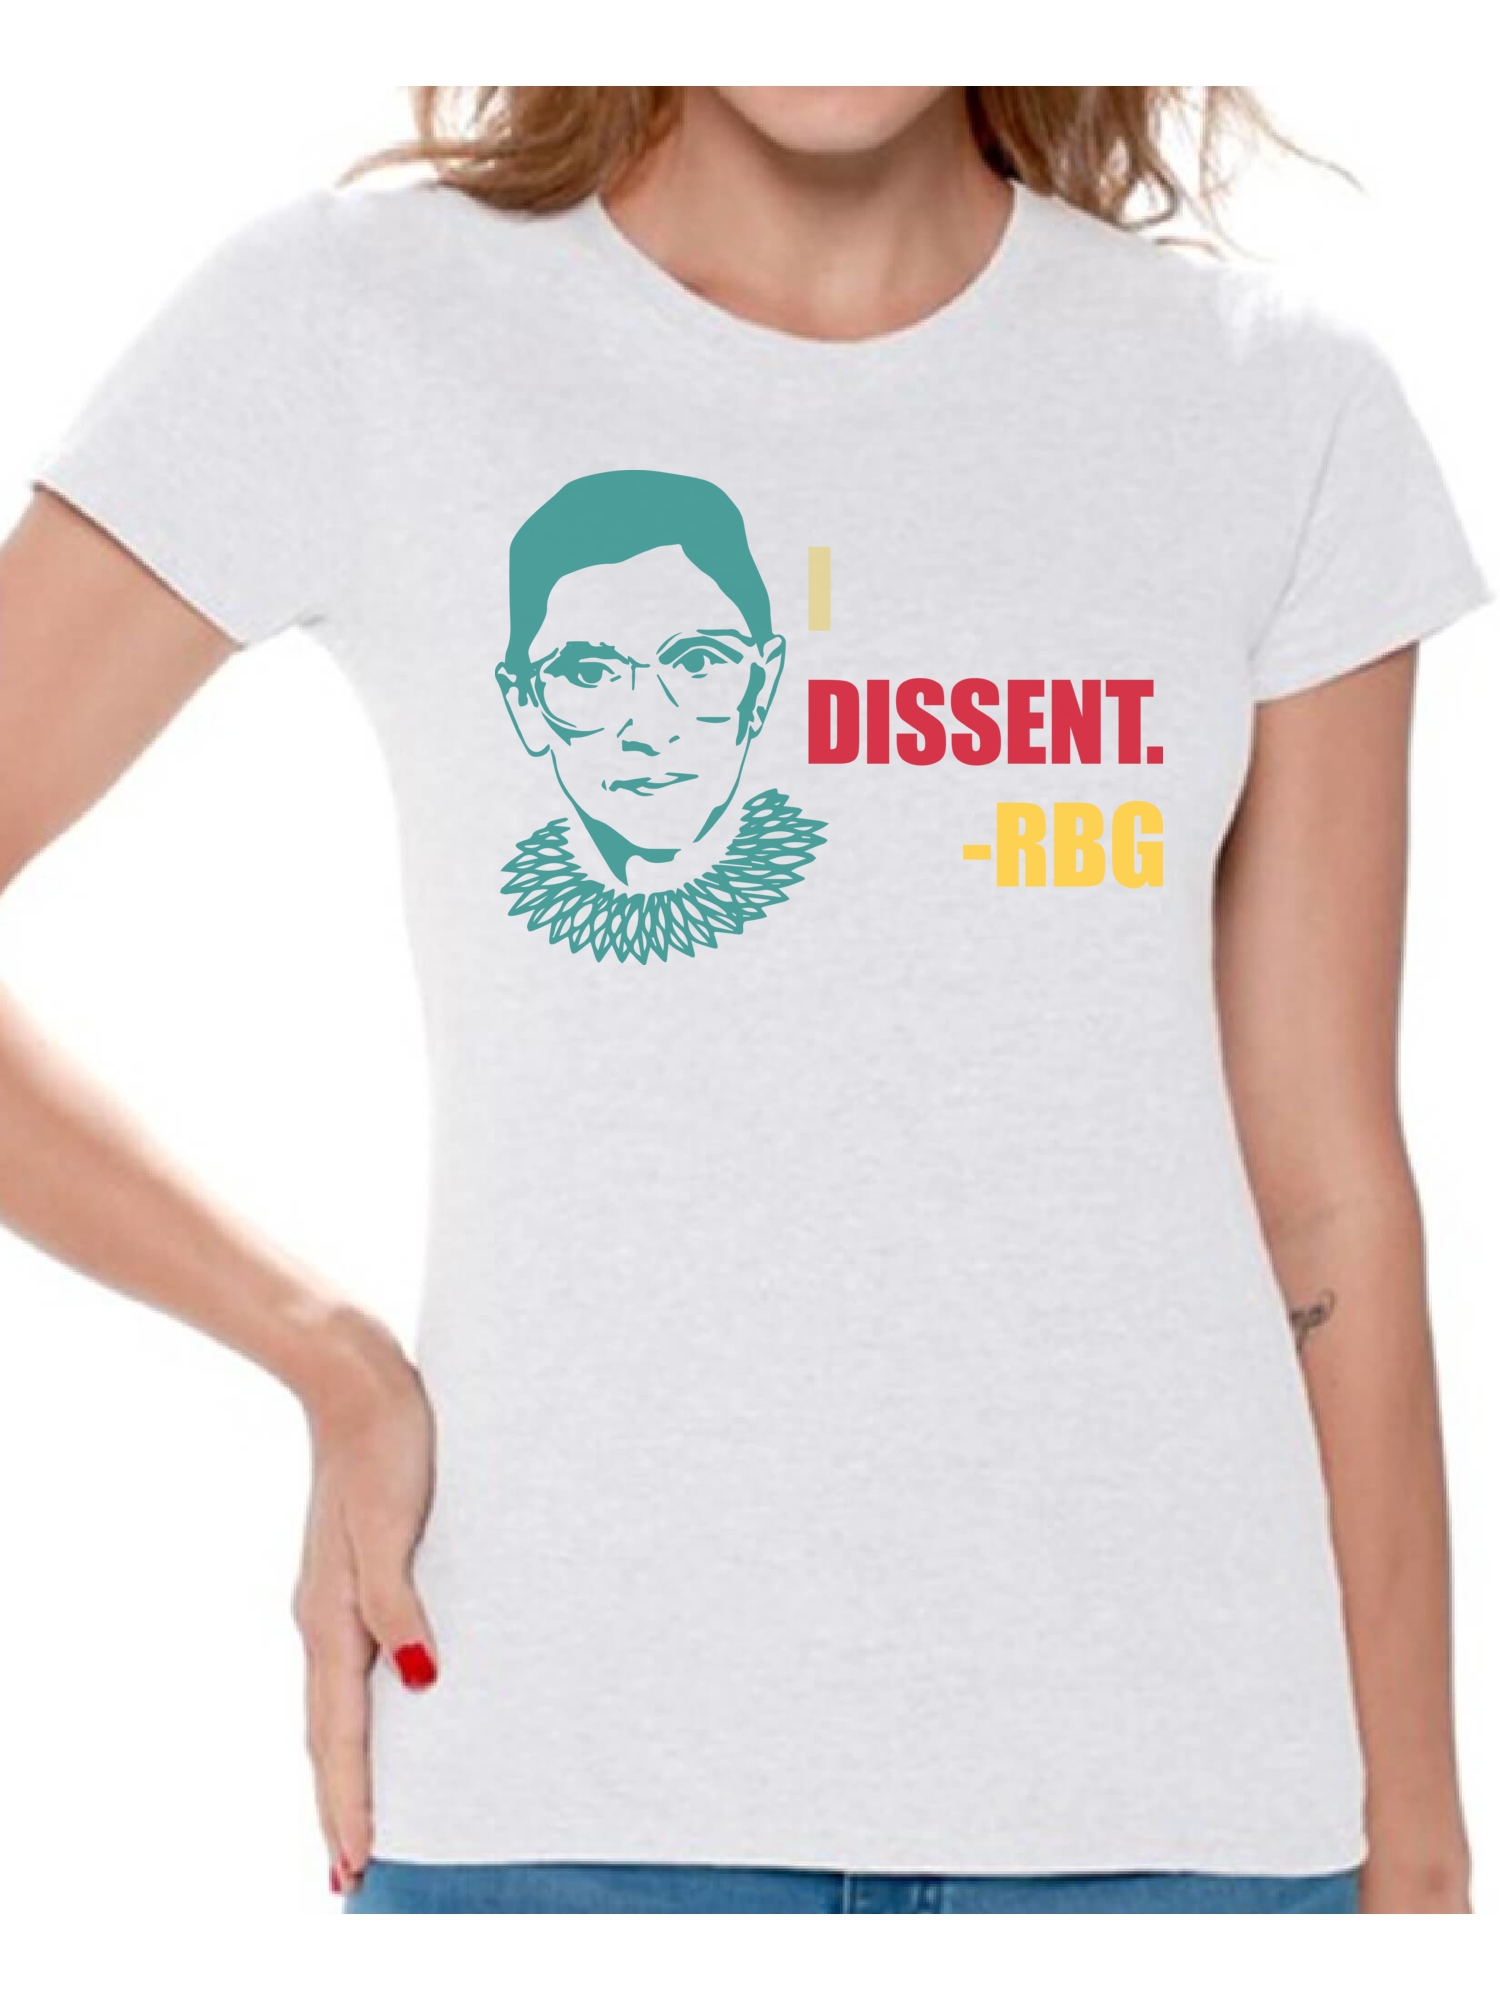 Awkward Styles Ruth Bader Ginsburg Shirt for Women Dissent RBG Notorious Shirt RBG T Shirt Ladies Support Women Empowerment T-shirt - image 1 of 4